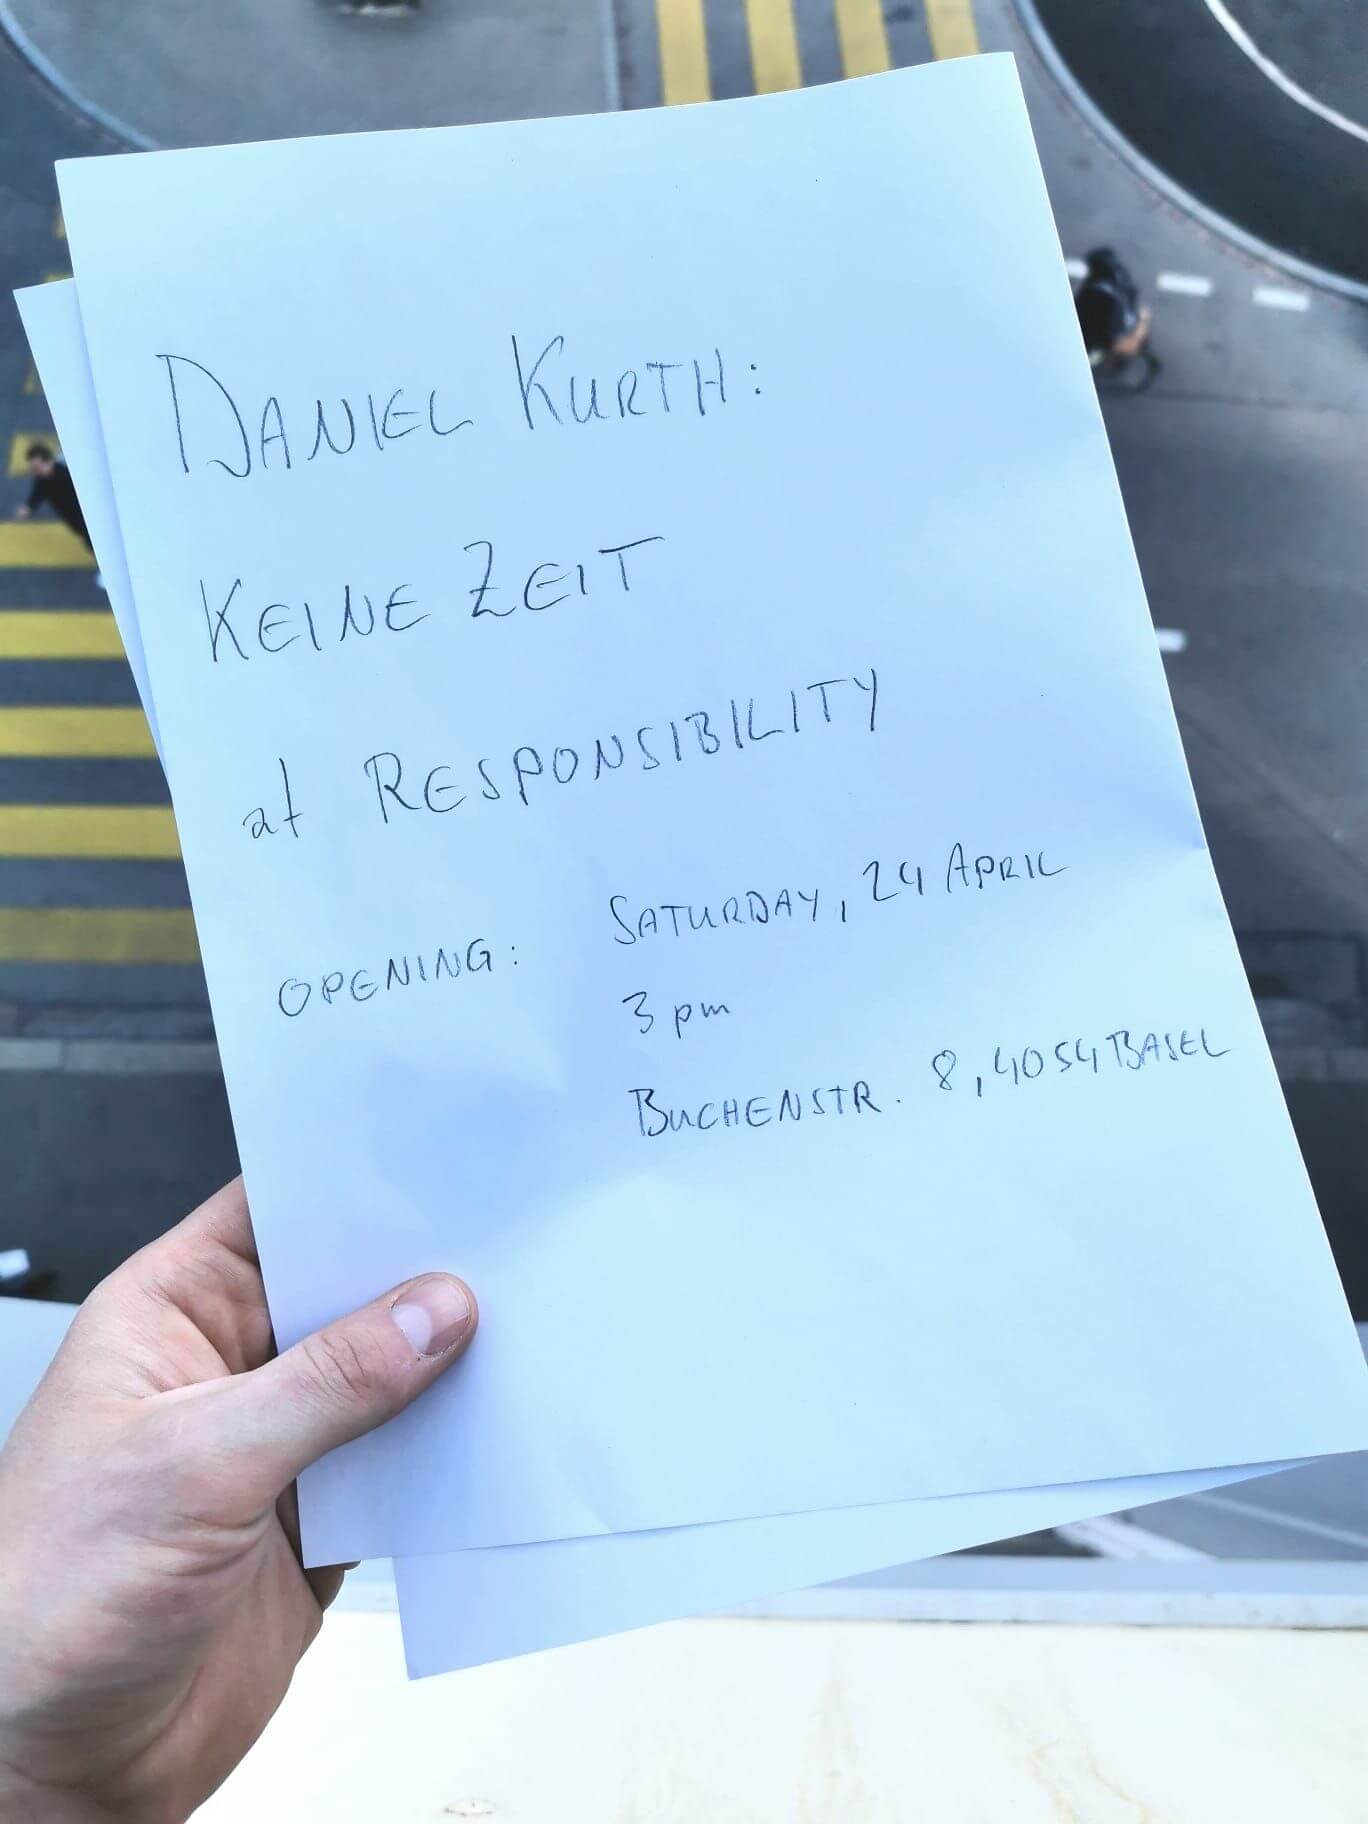 Keine Zeit at Responsibility by Daniel Kurth 2021